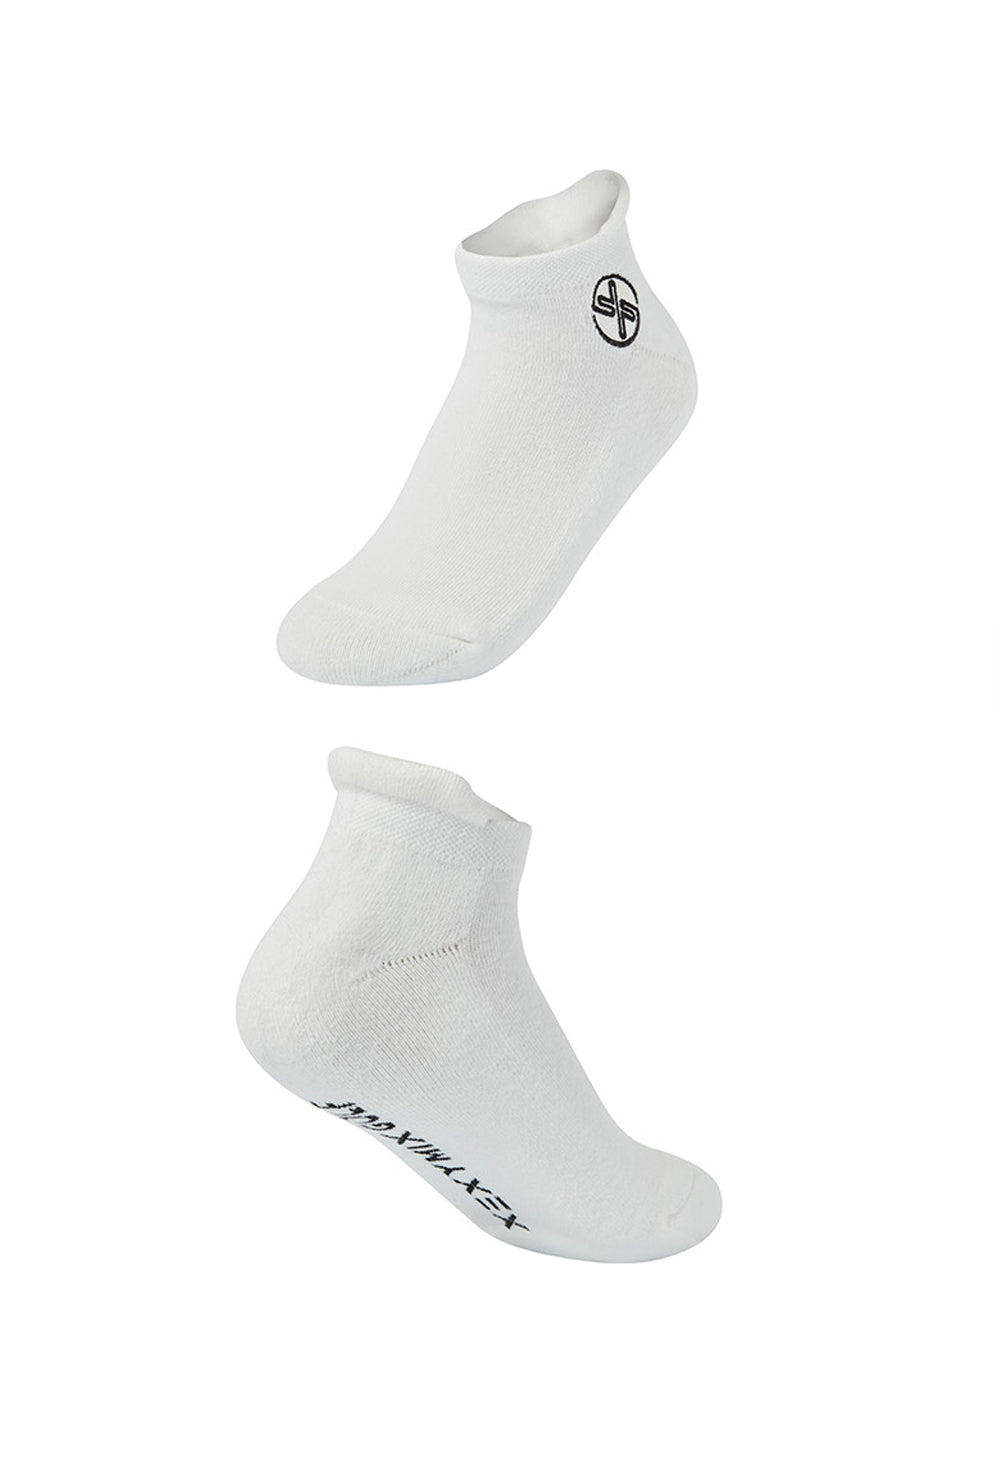 XEXYMIX Cushioning Ankle Socks - Pure White